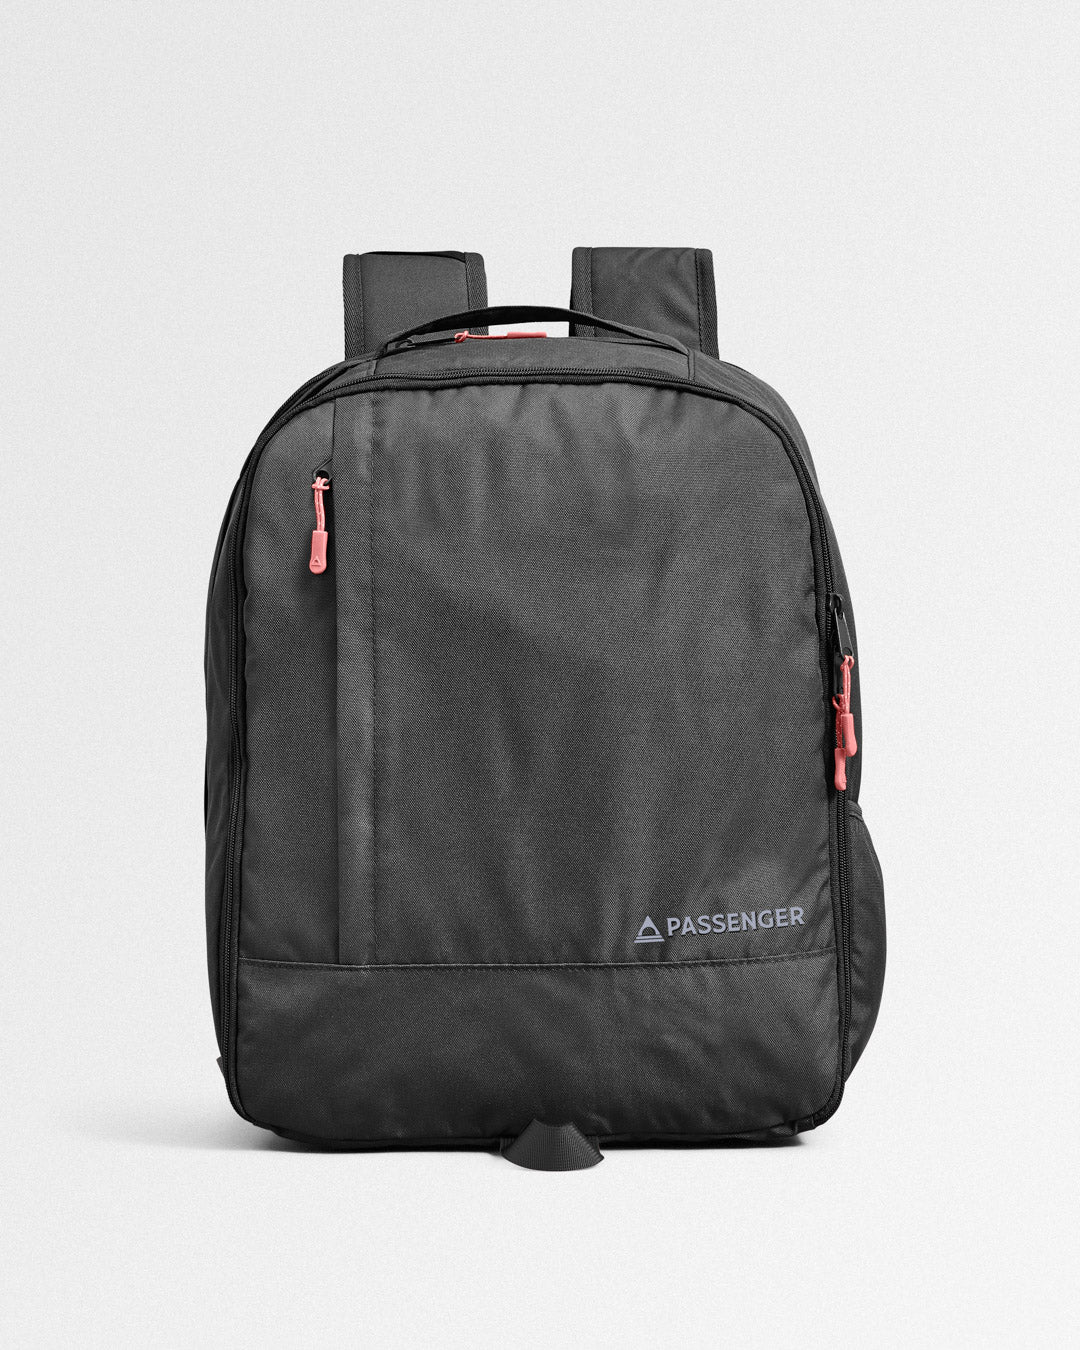 Ascent Weekender Recycled 35L Backpack - Black